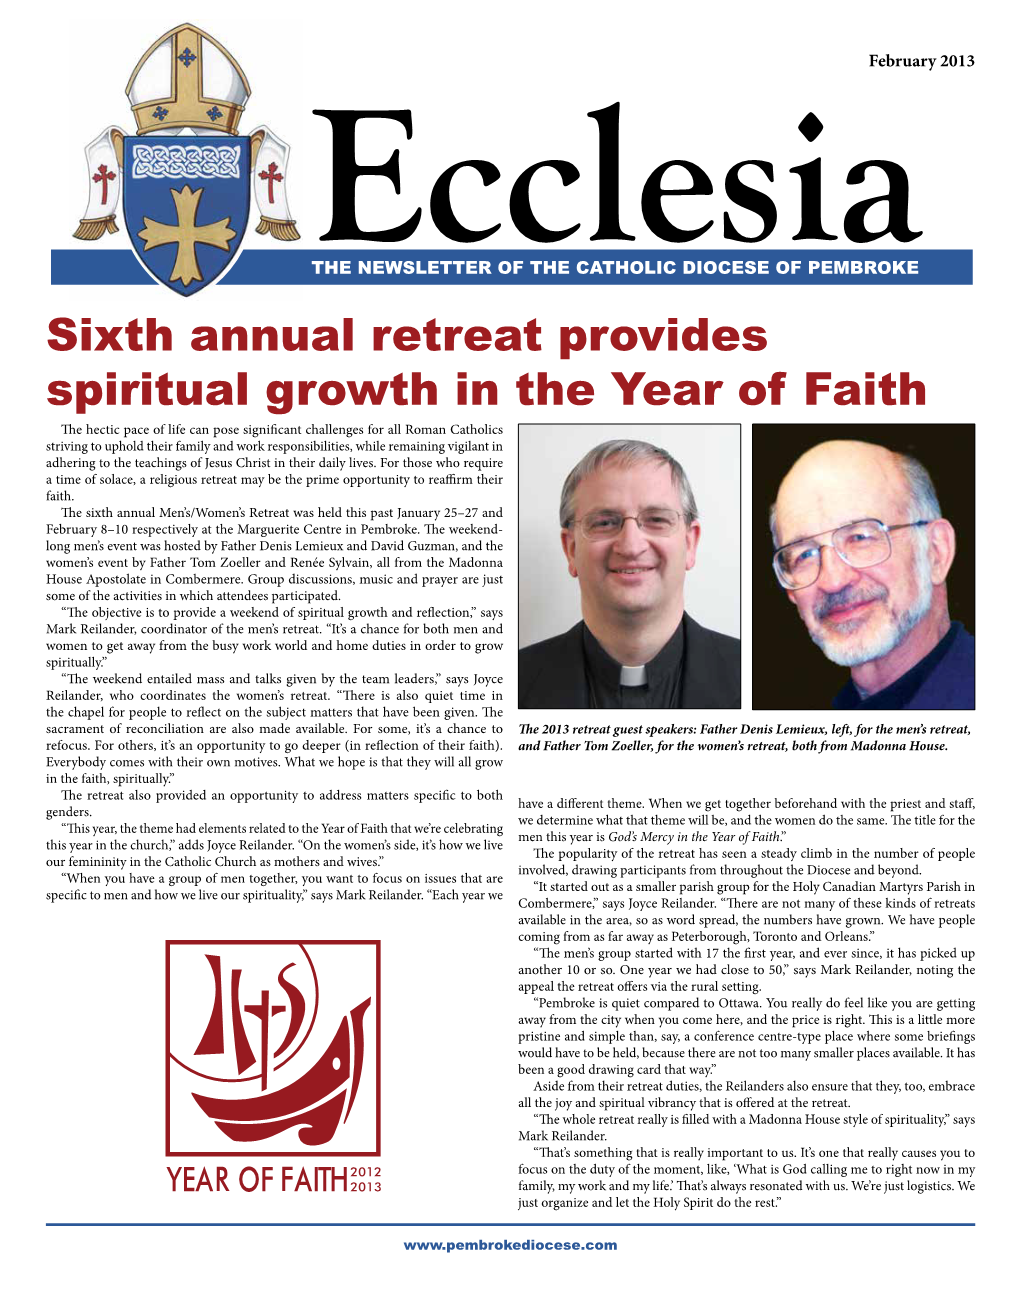 Sixth Annual Retreat Provides Spiritual Growth in the Year of Faith